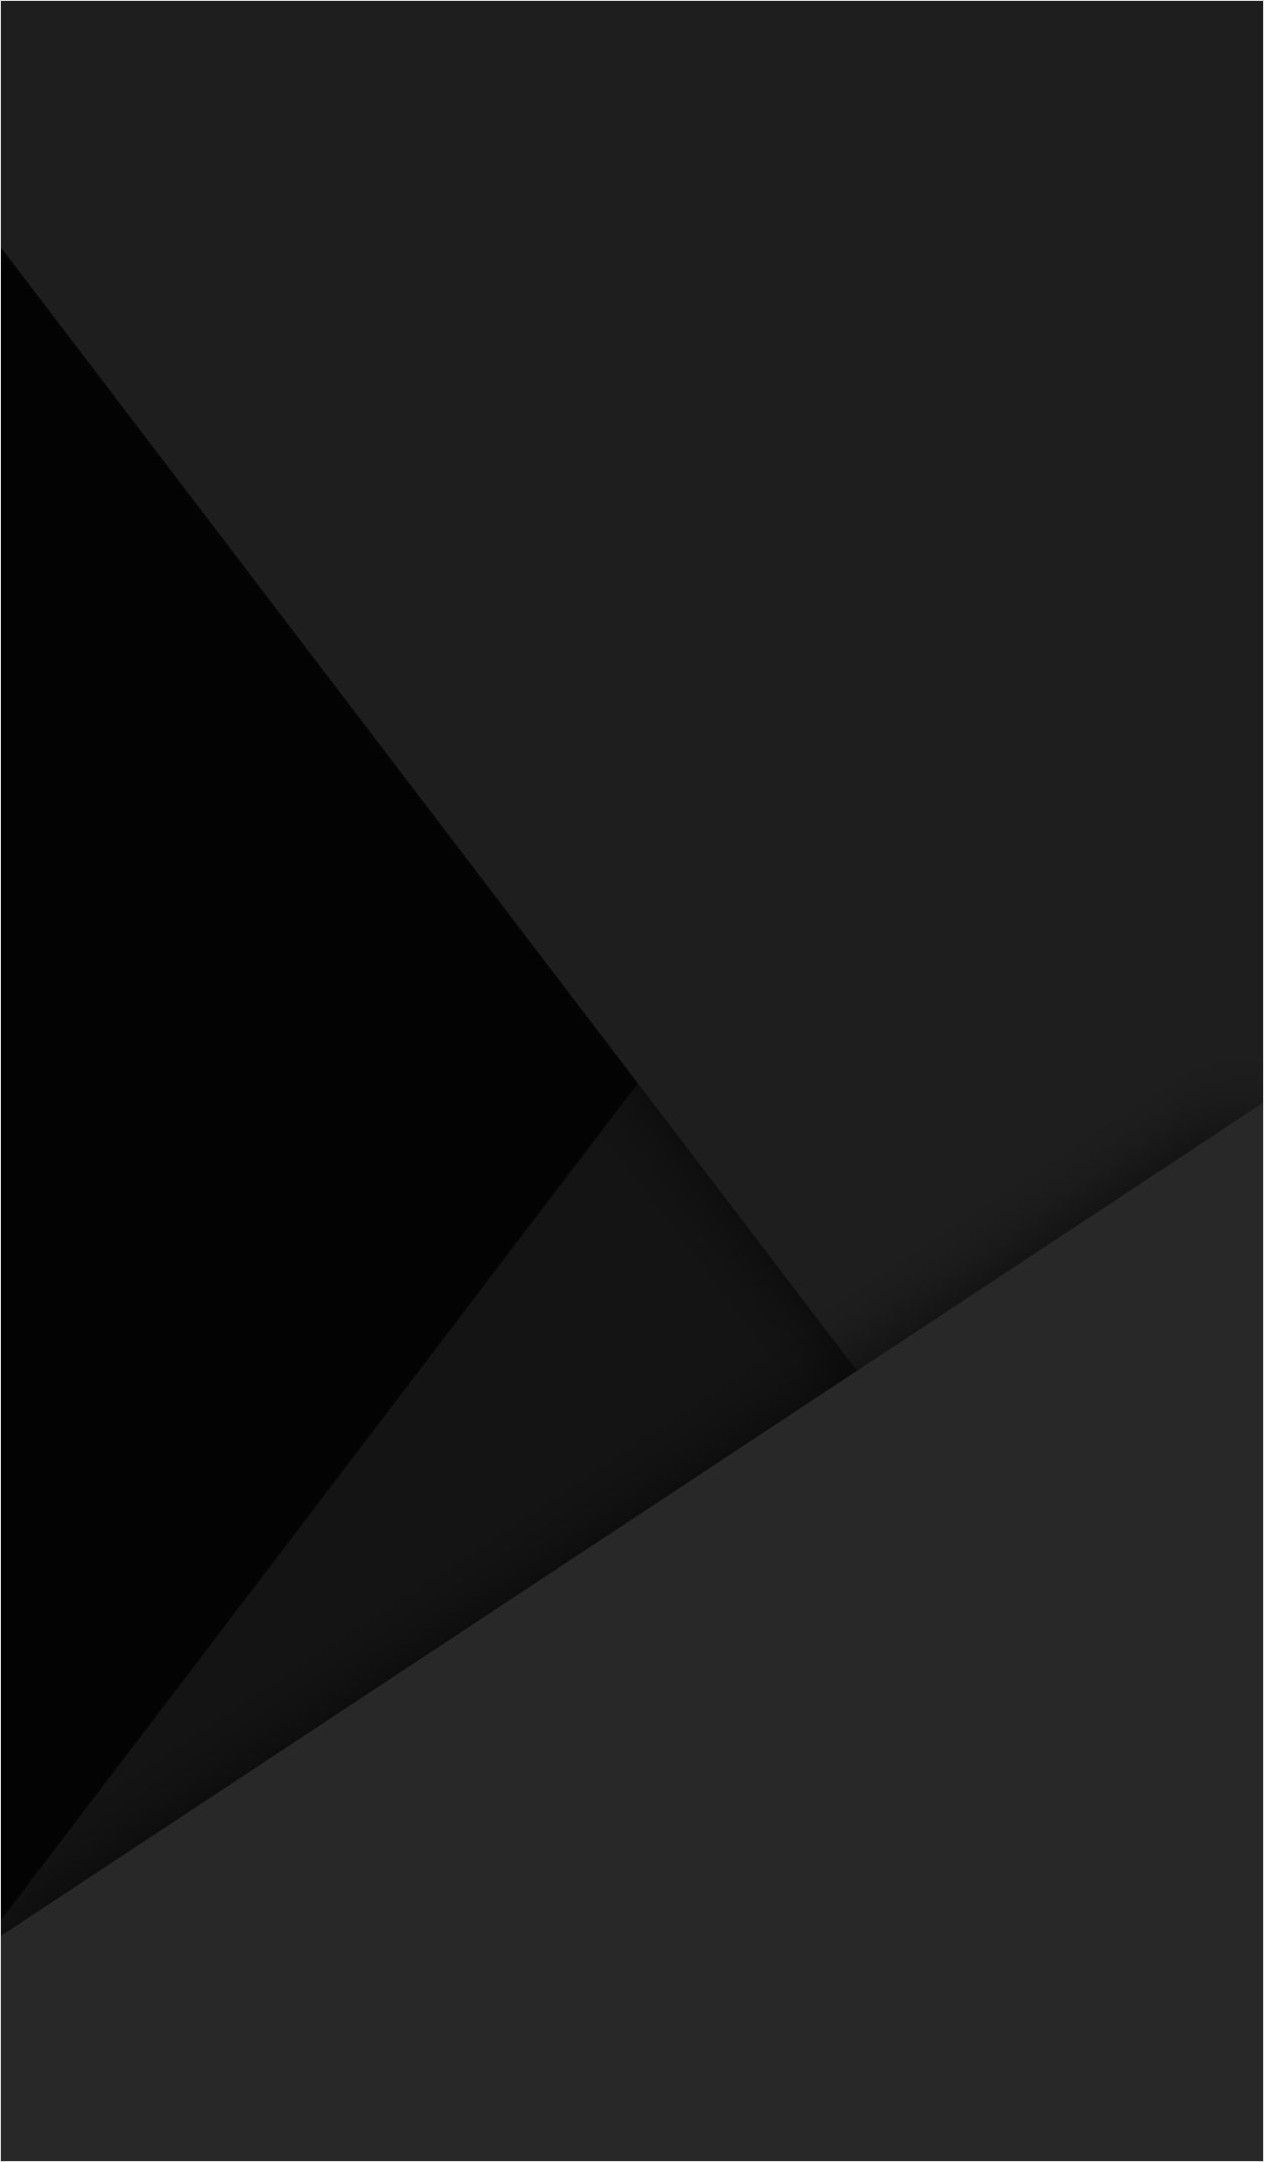 4k Dark And Gray Forgiveness Wallpaper. Pure black wallpaper, Black wallpaper, Grey wallpaper mobile